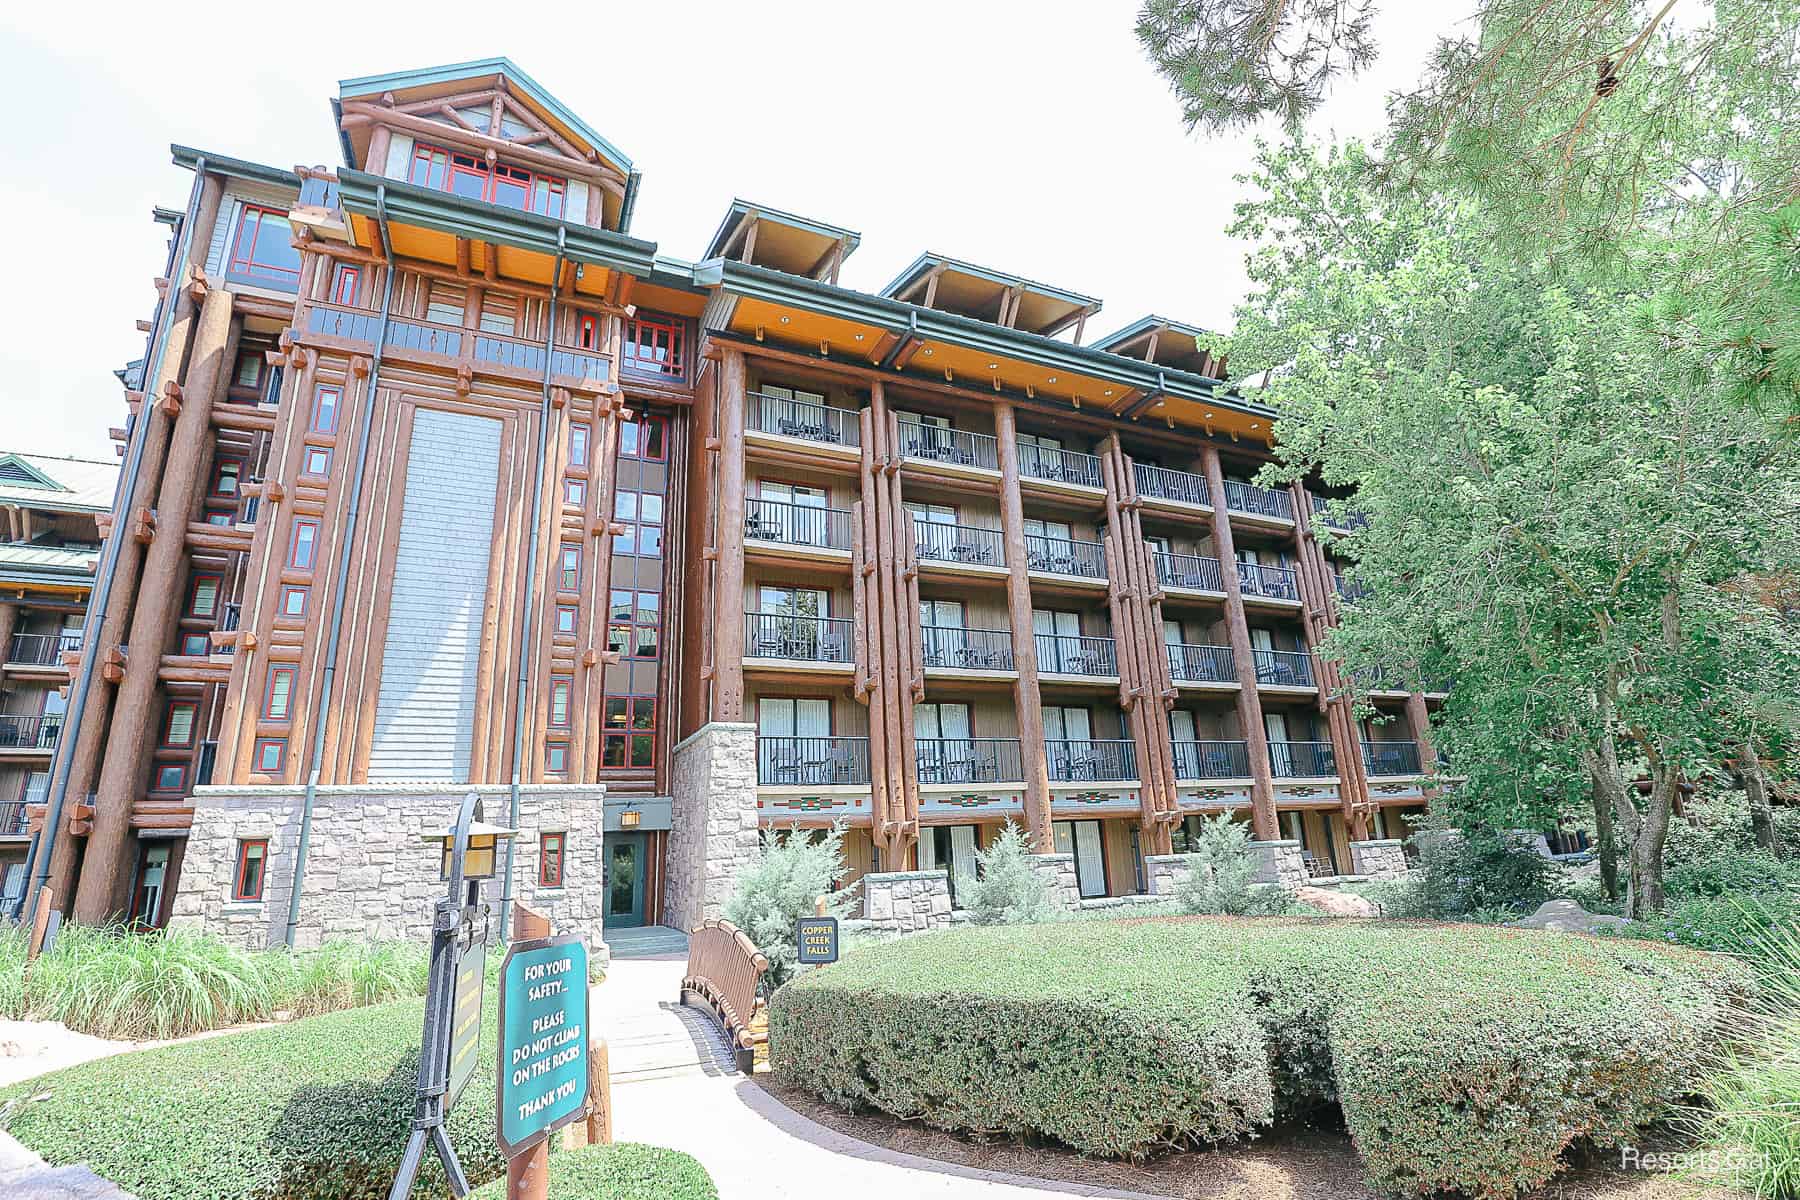 Copper Creek Villas section of Disney's Wilderness Lodge 